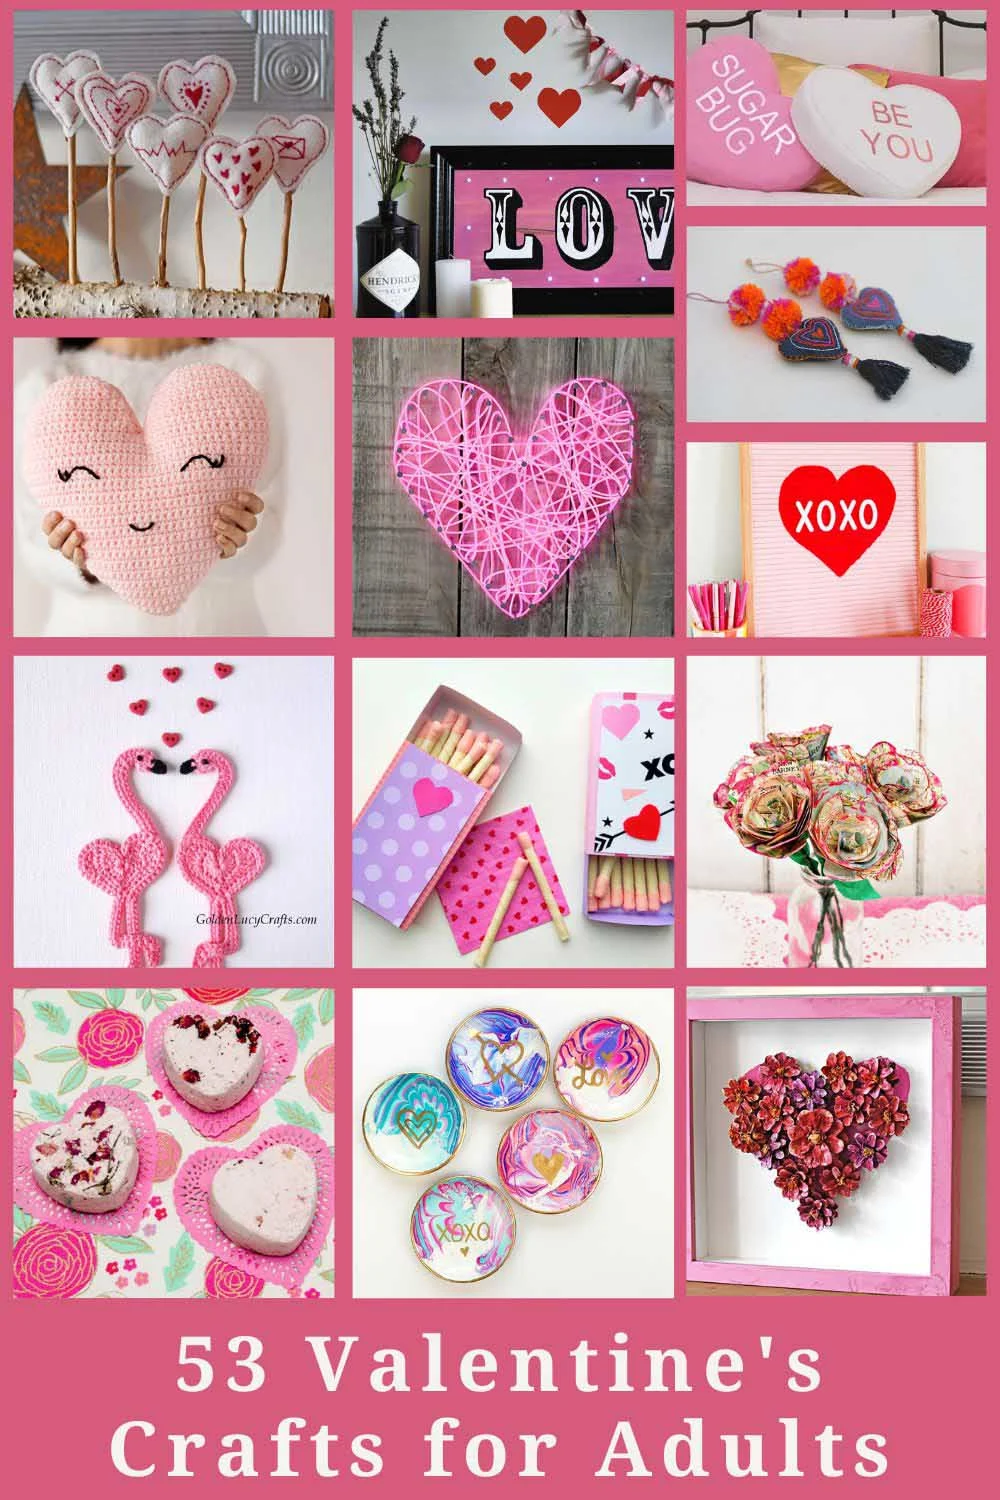 Valentine's Day Crafts for Kids - I See Me! Blog